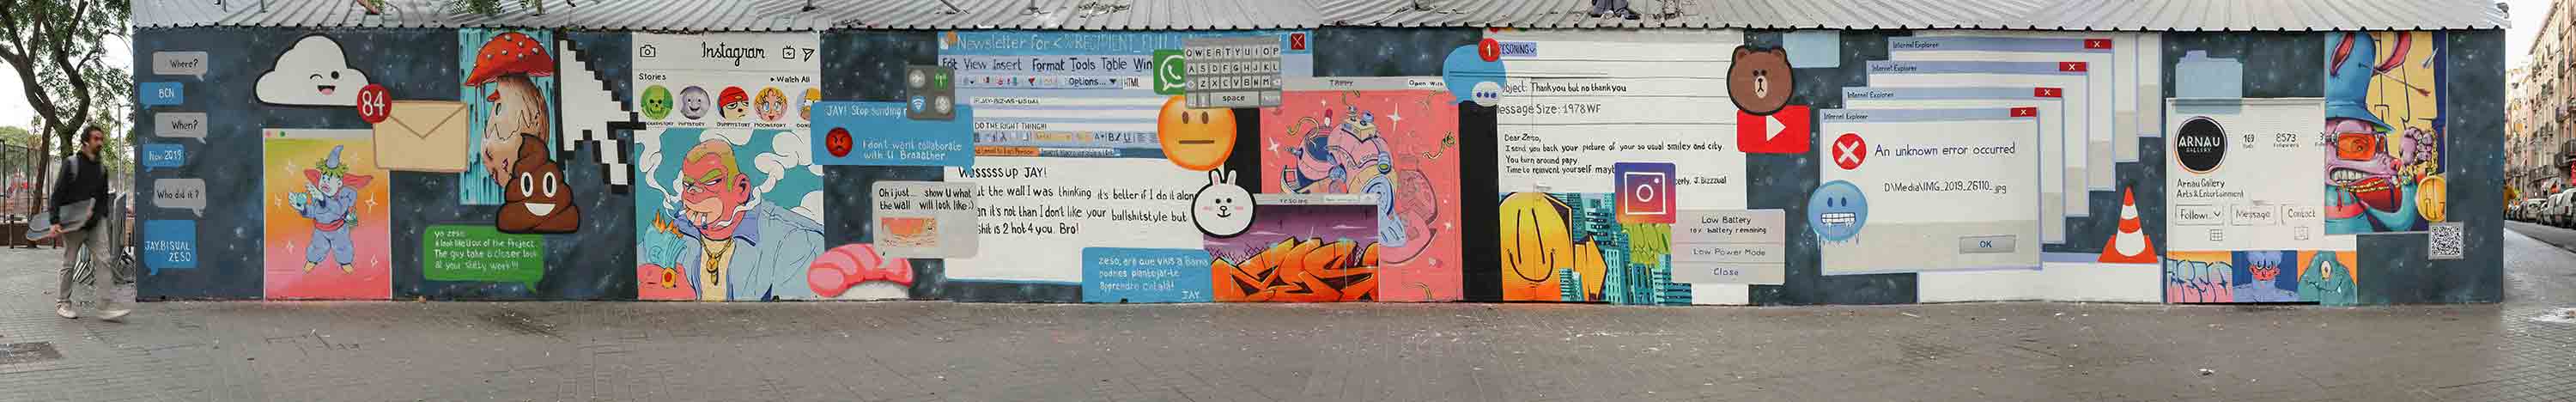 Jay Bisual & Zeso arte urbano Barcelona